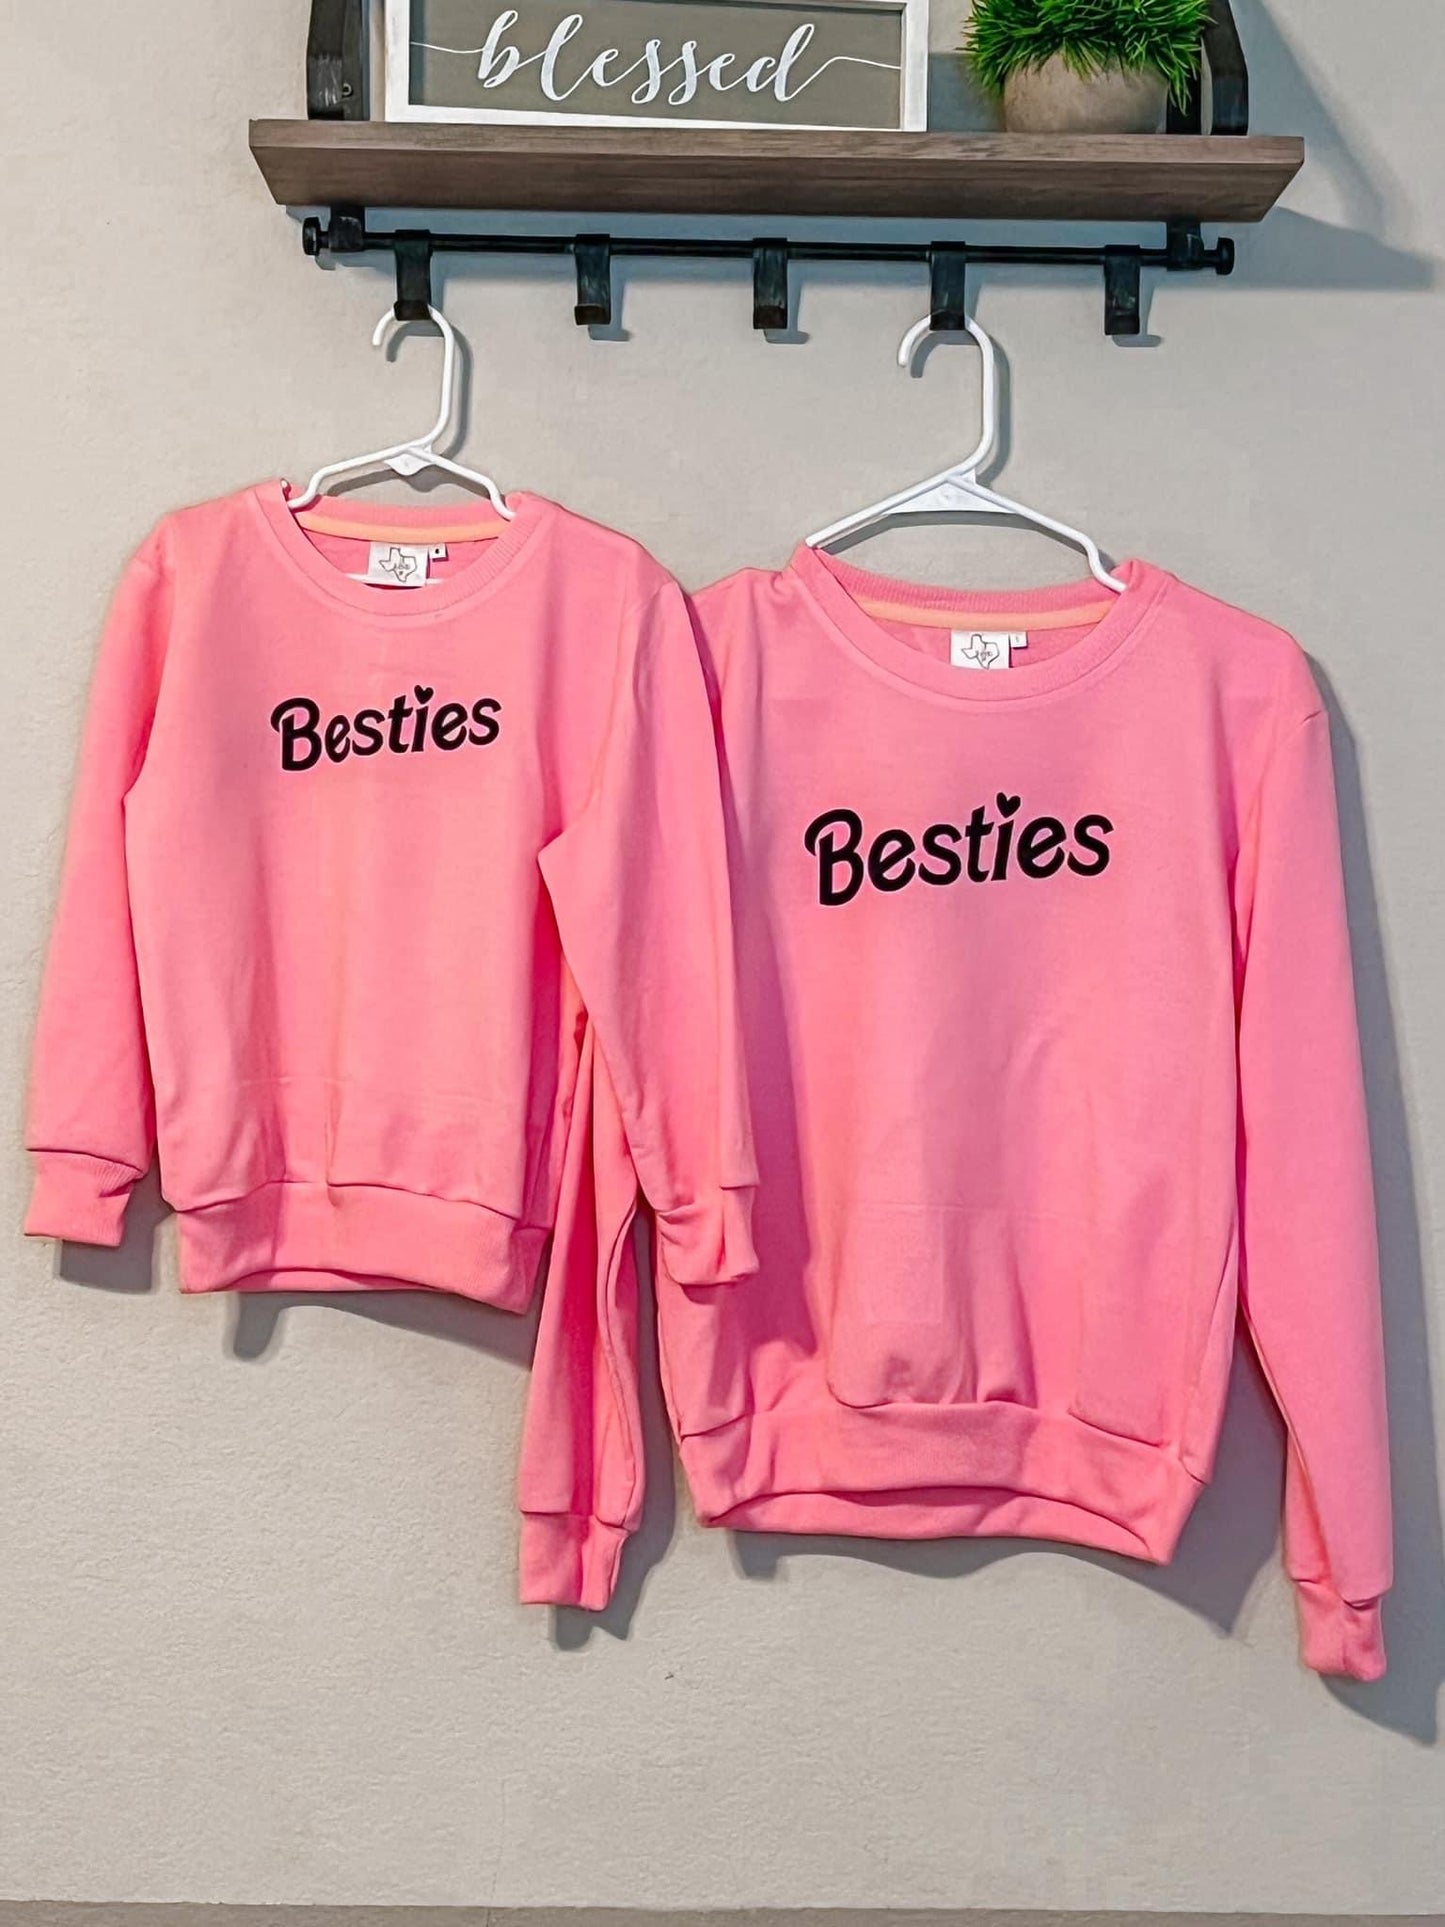 Besties Shirt